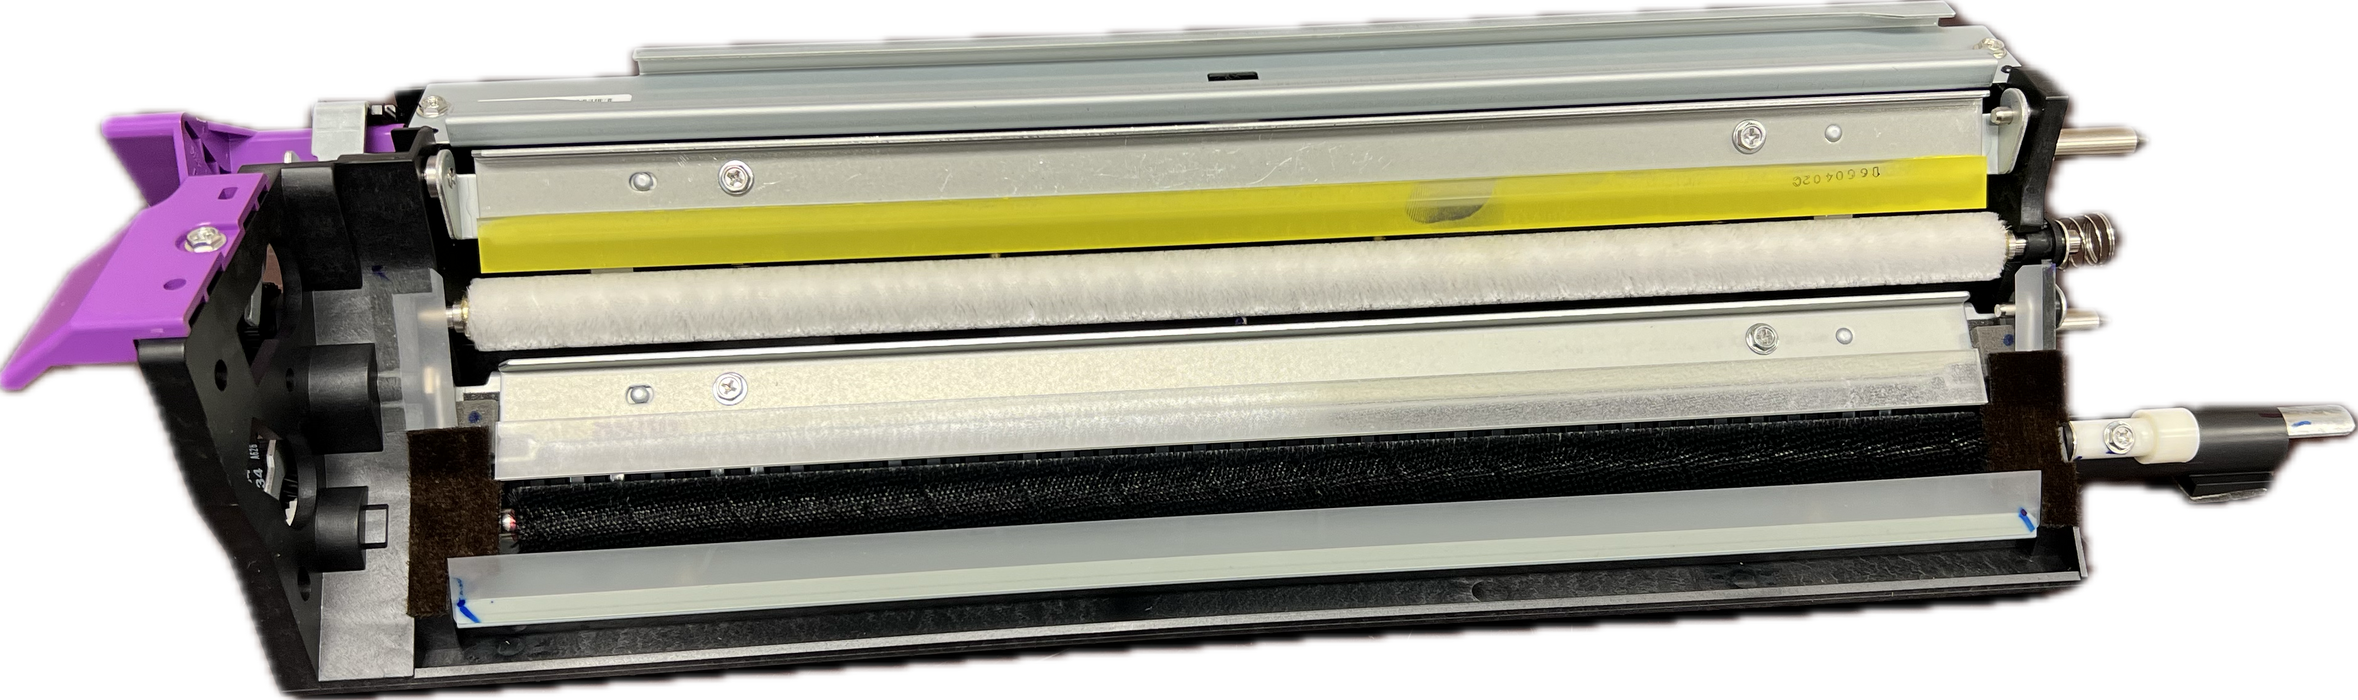 Genuine Ricoh Belt Cleaner Assembly | D074-6400